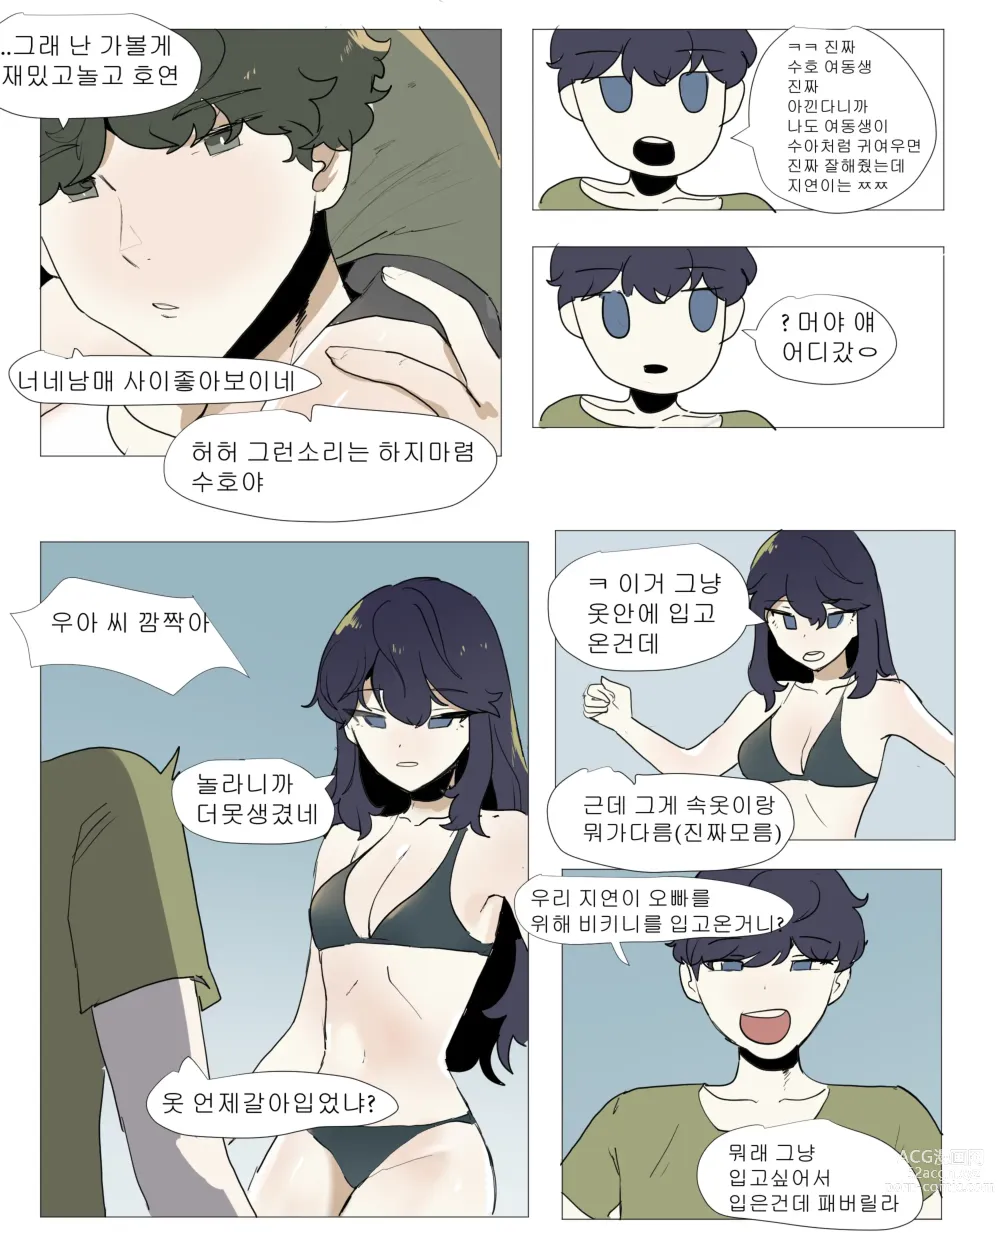 Page 5 of doujinshi 여동생이랑 근친하는 만화 5